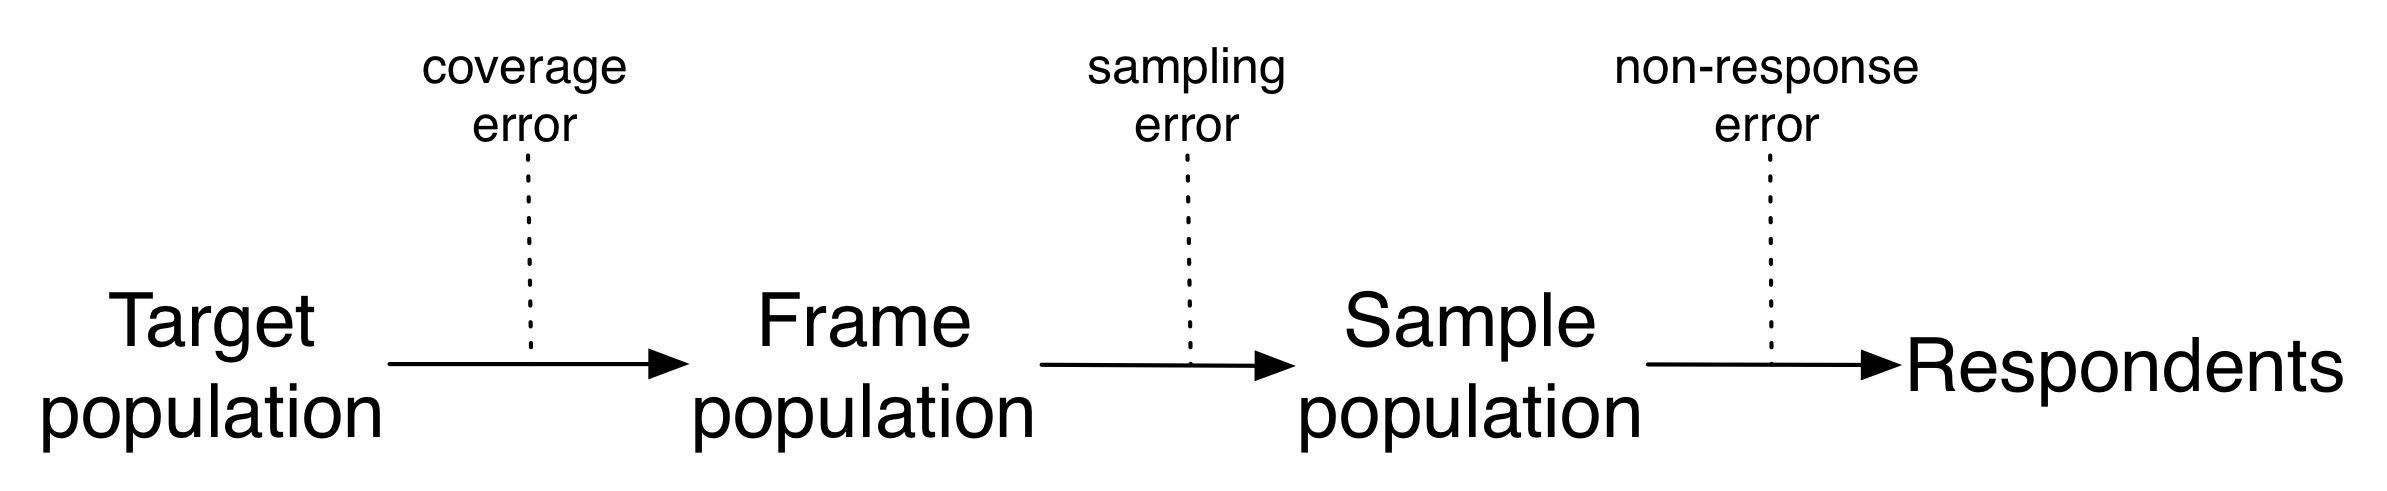 Figure 3.1: Representation errors.